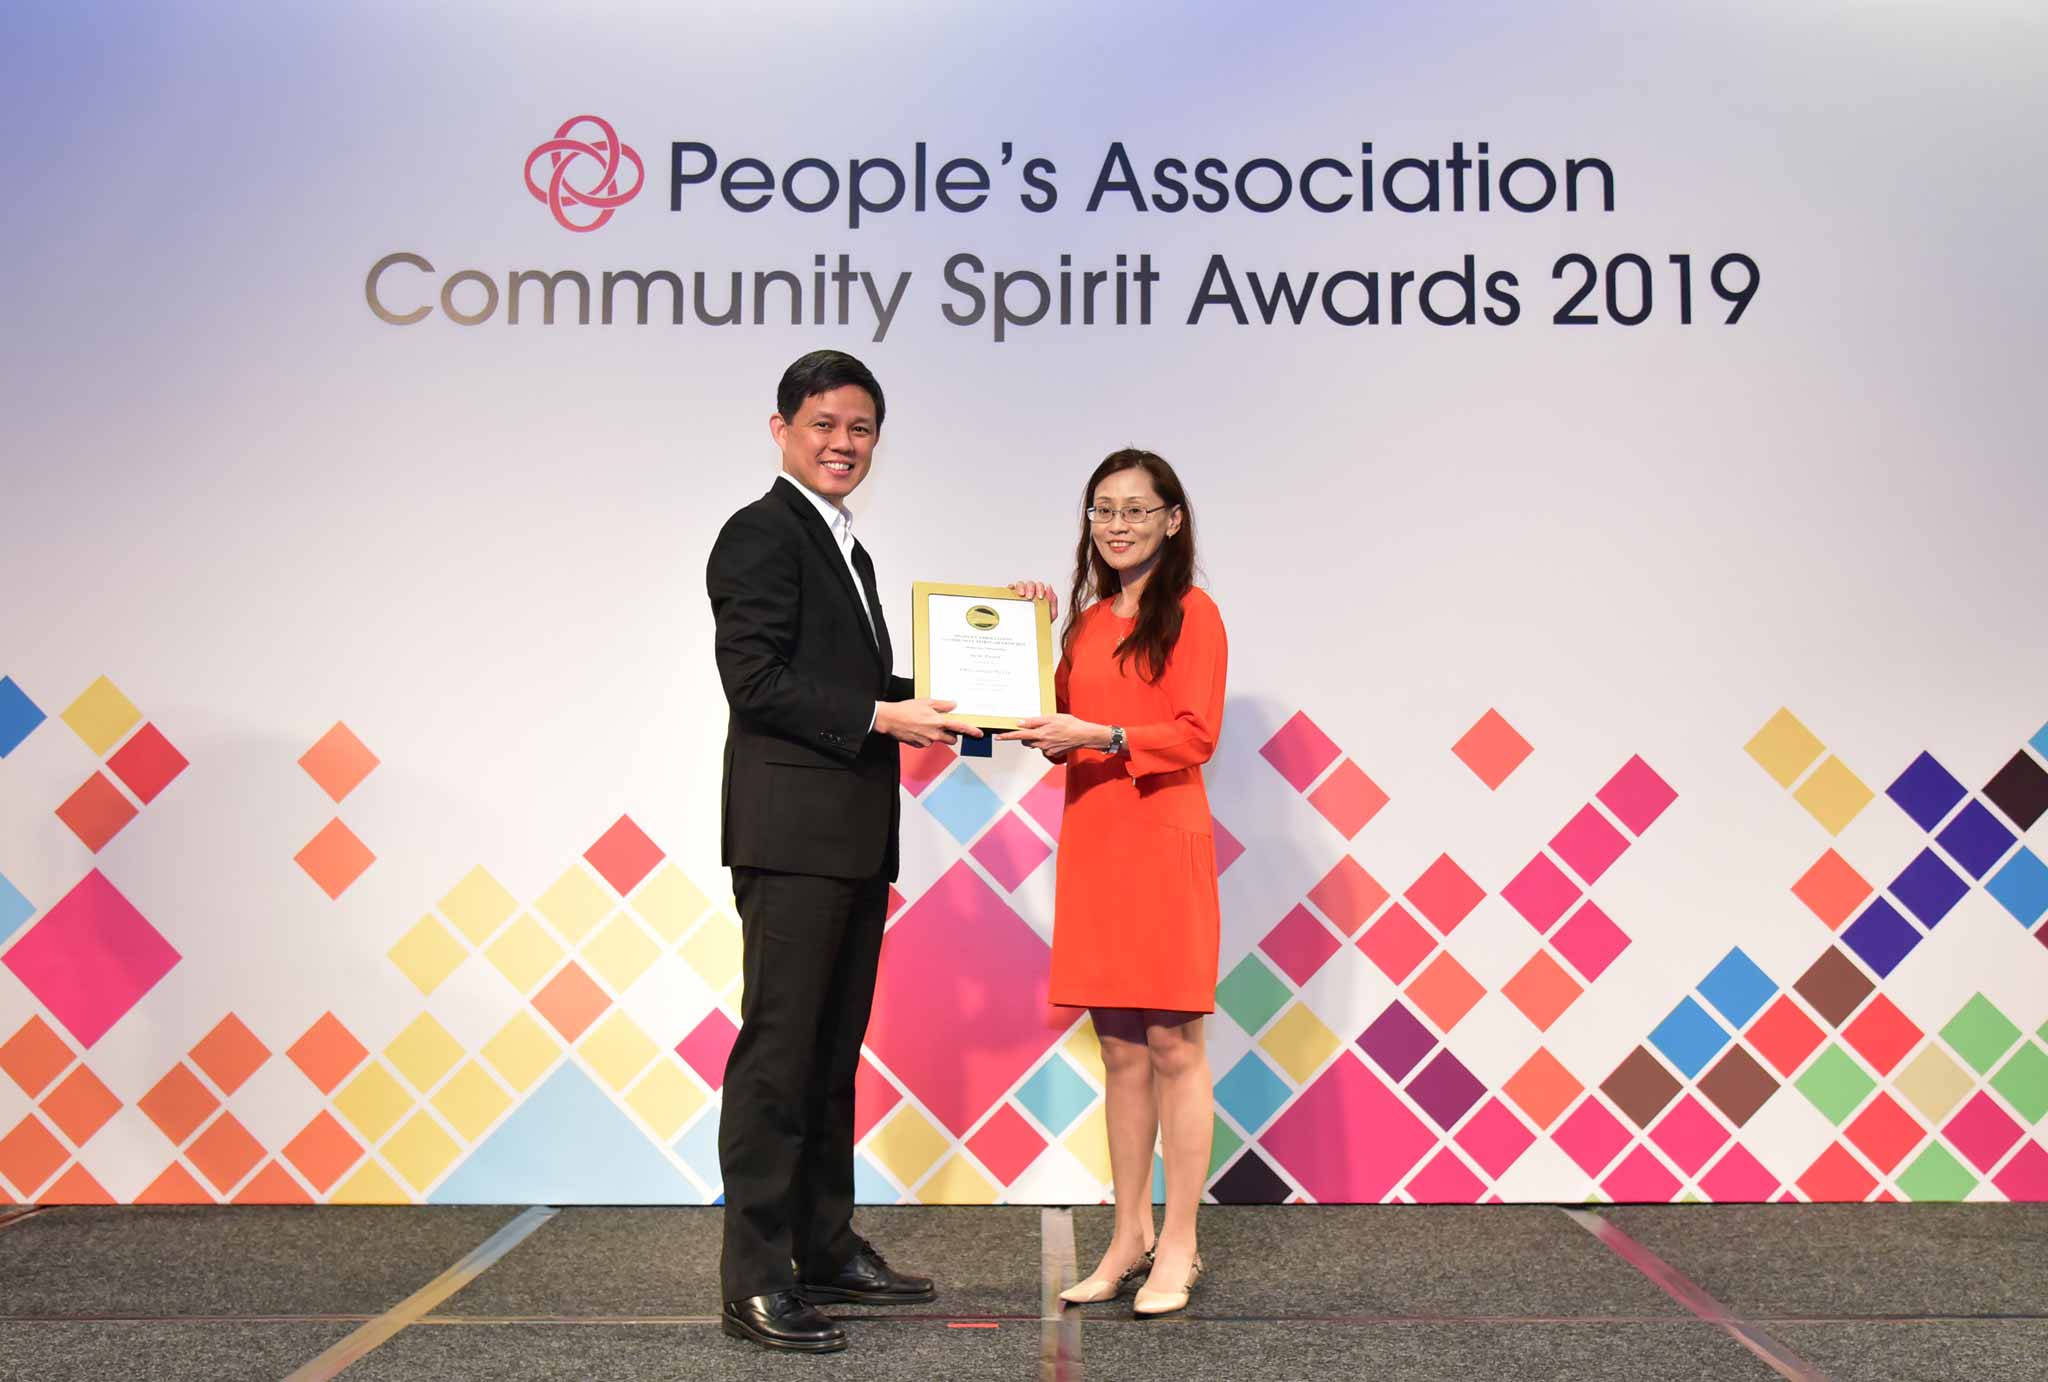 RMA Contracts Community Partnership Merit Award at PA Community Spirit Awards 2019